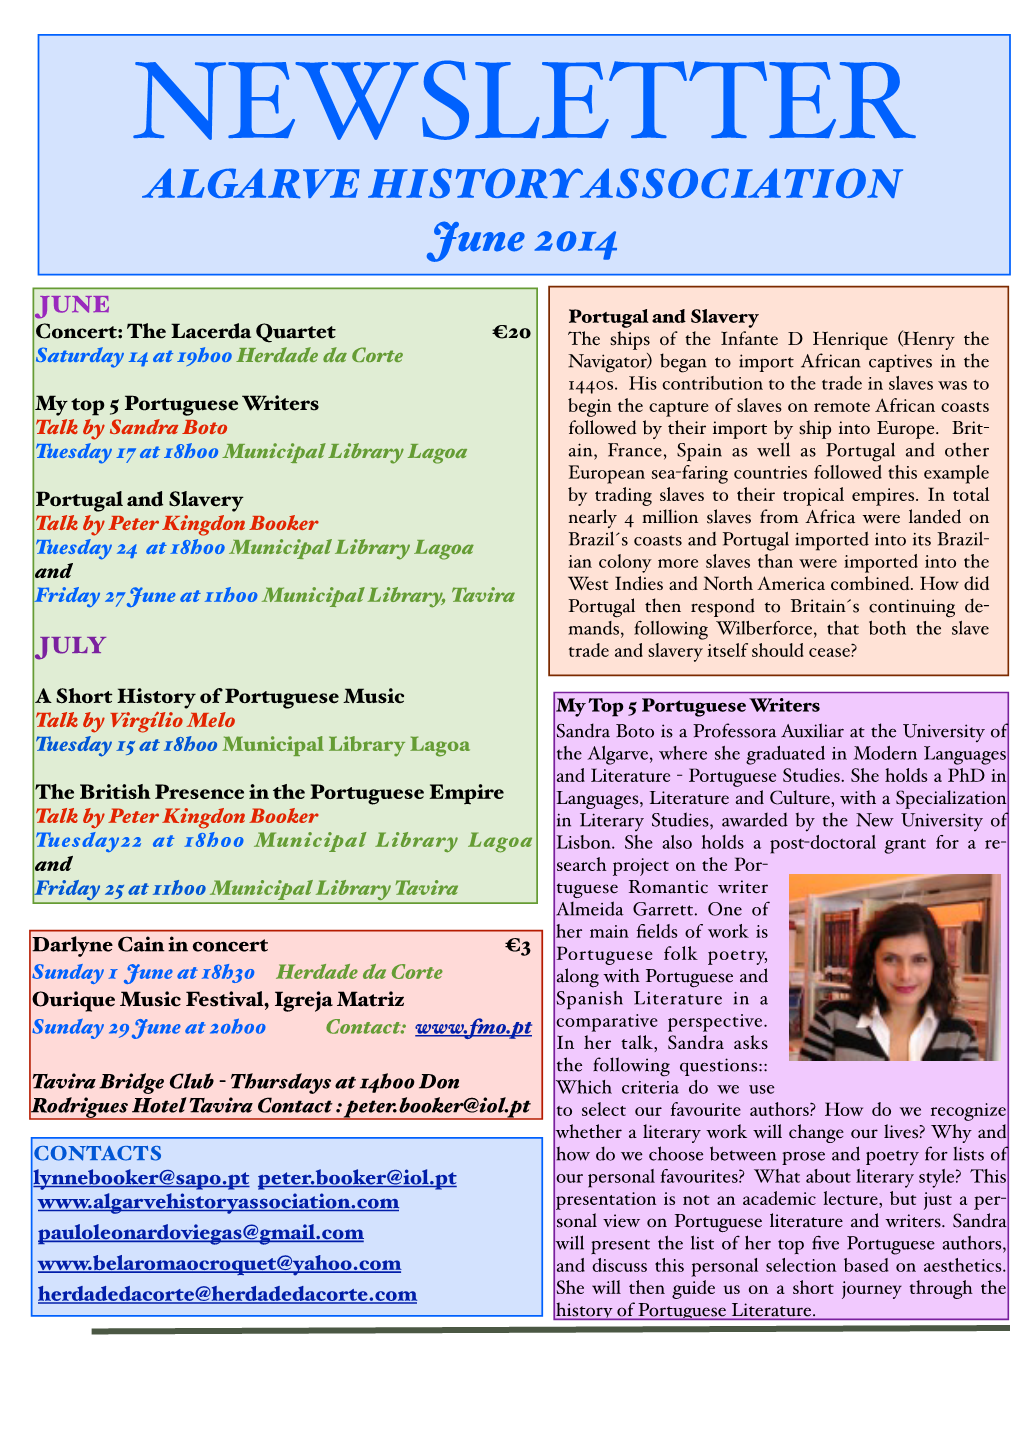 NEWSLETTER ALGARVE HISTORY ASSOCIATION June 2014